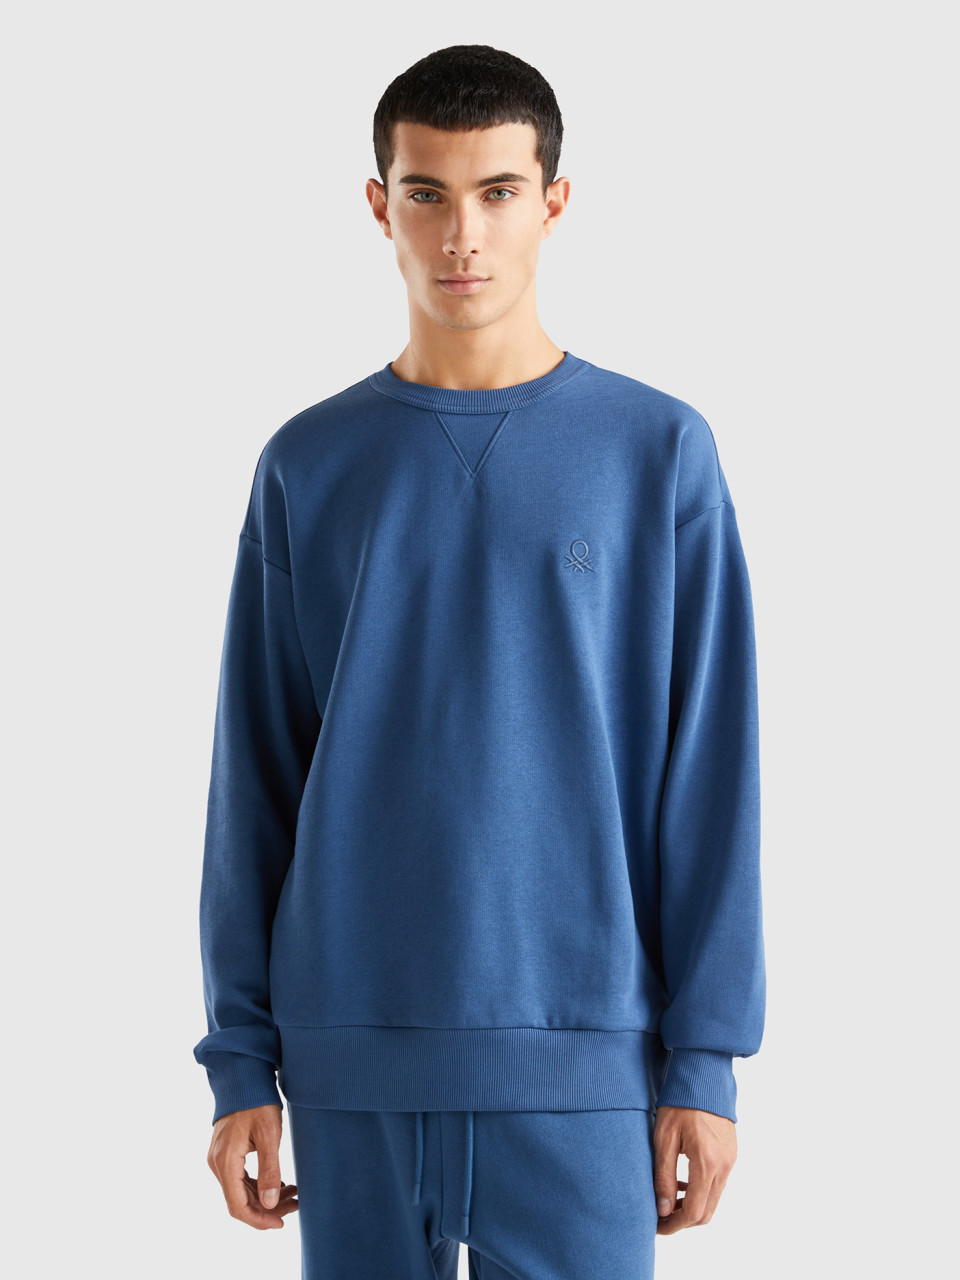 Benetton, Warmer Rundhals-sweater, Taubenblau, male